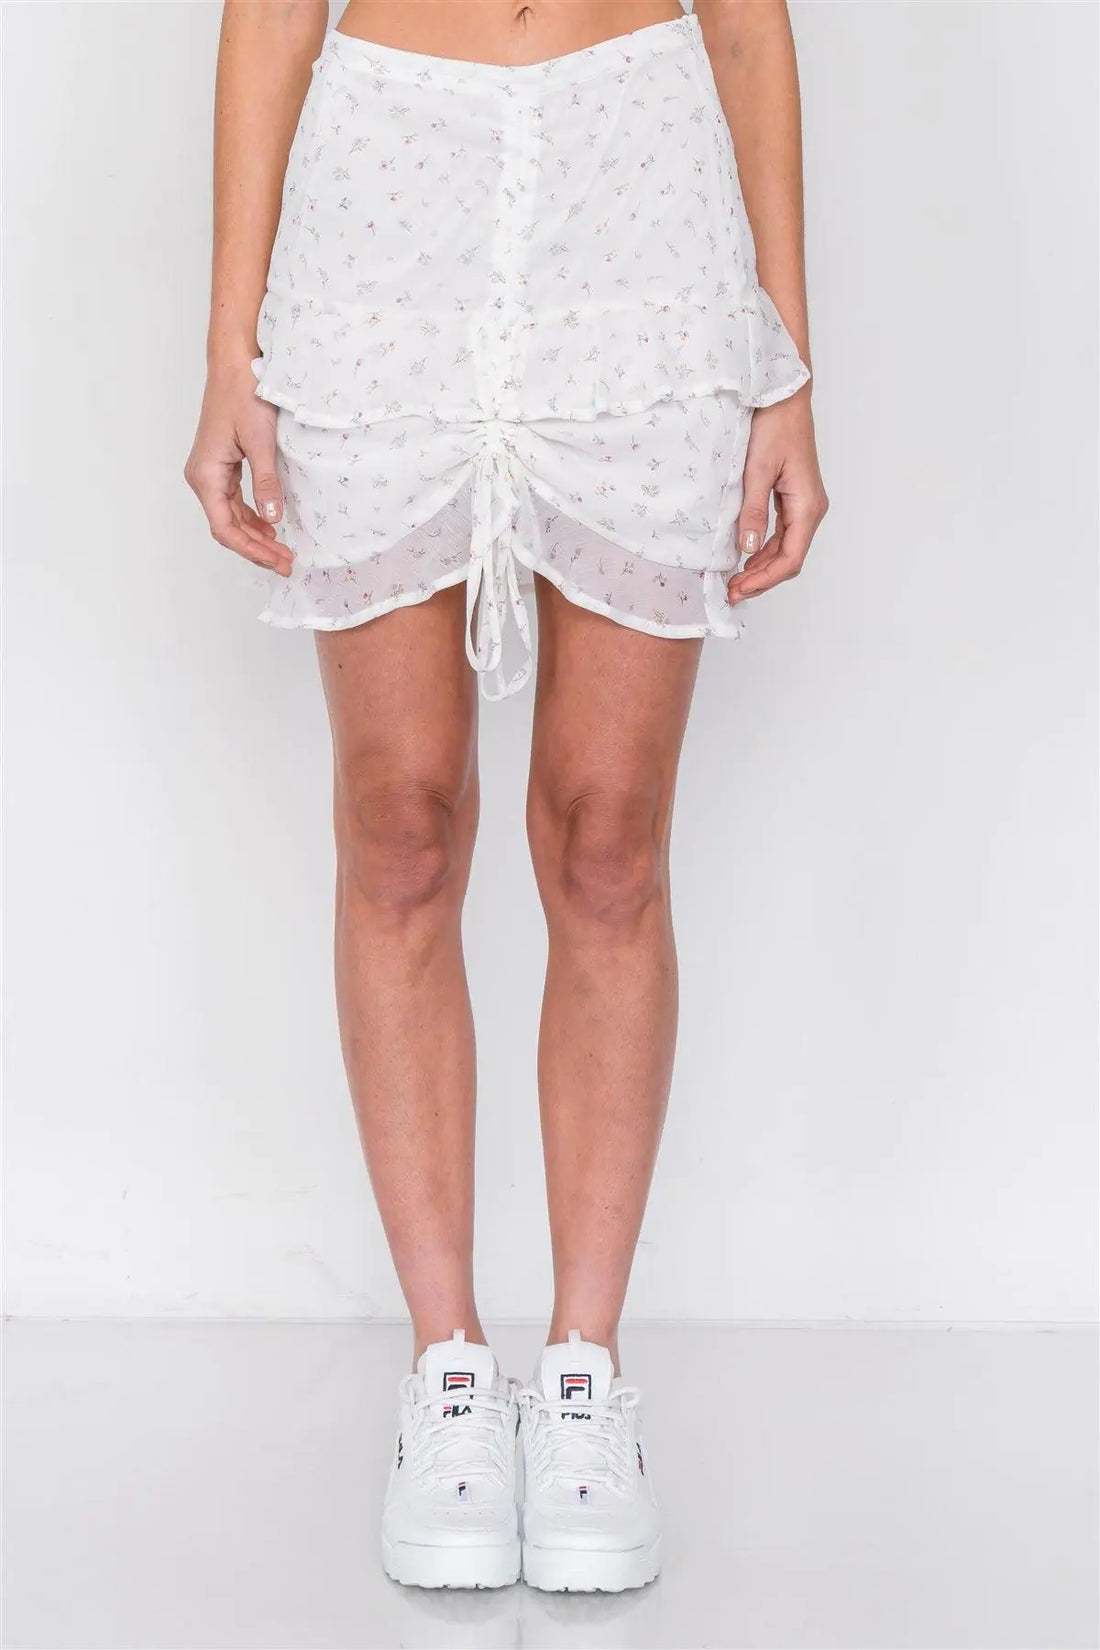 Off-White Minimalist Floral Print Bow Bandeau Mini Frill Skirt Set   /1-1-1